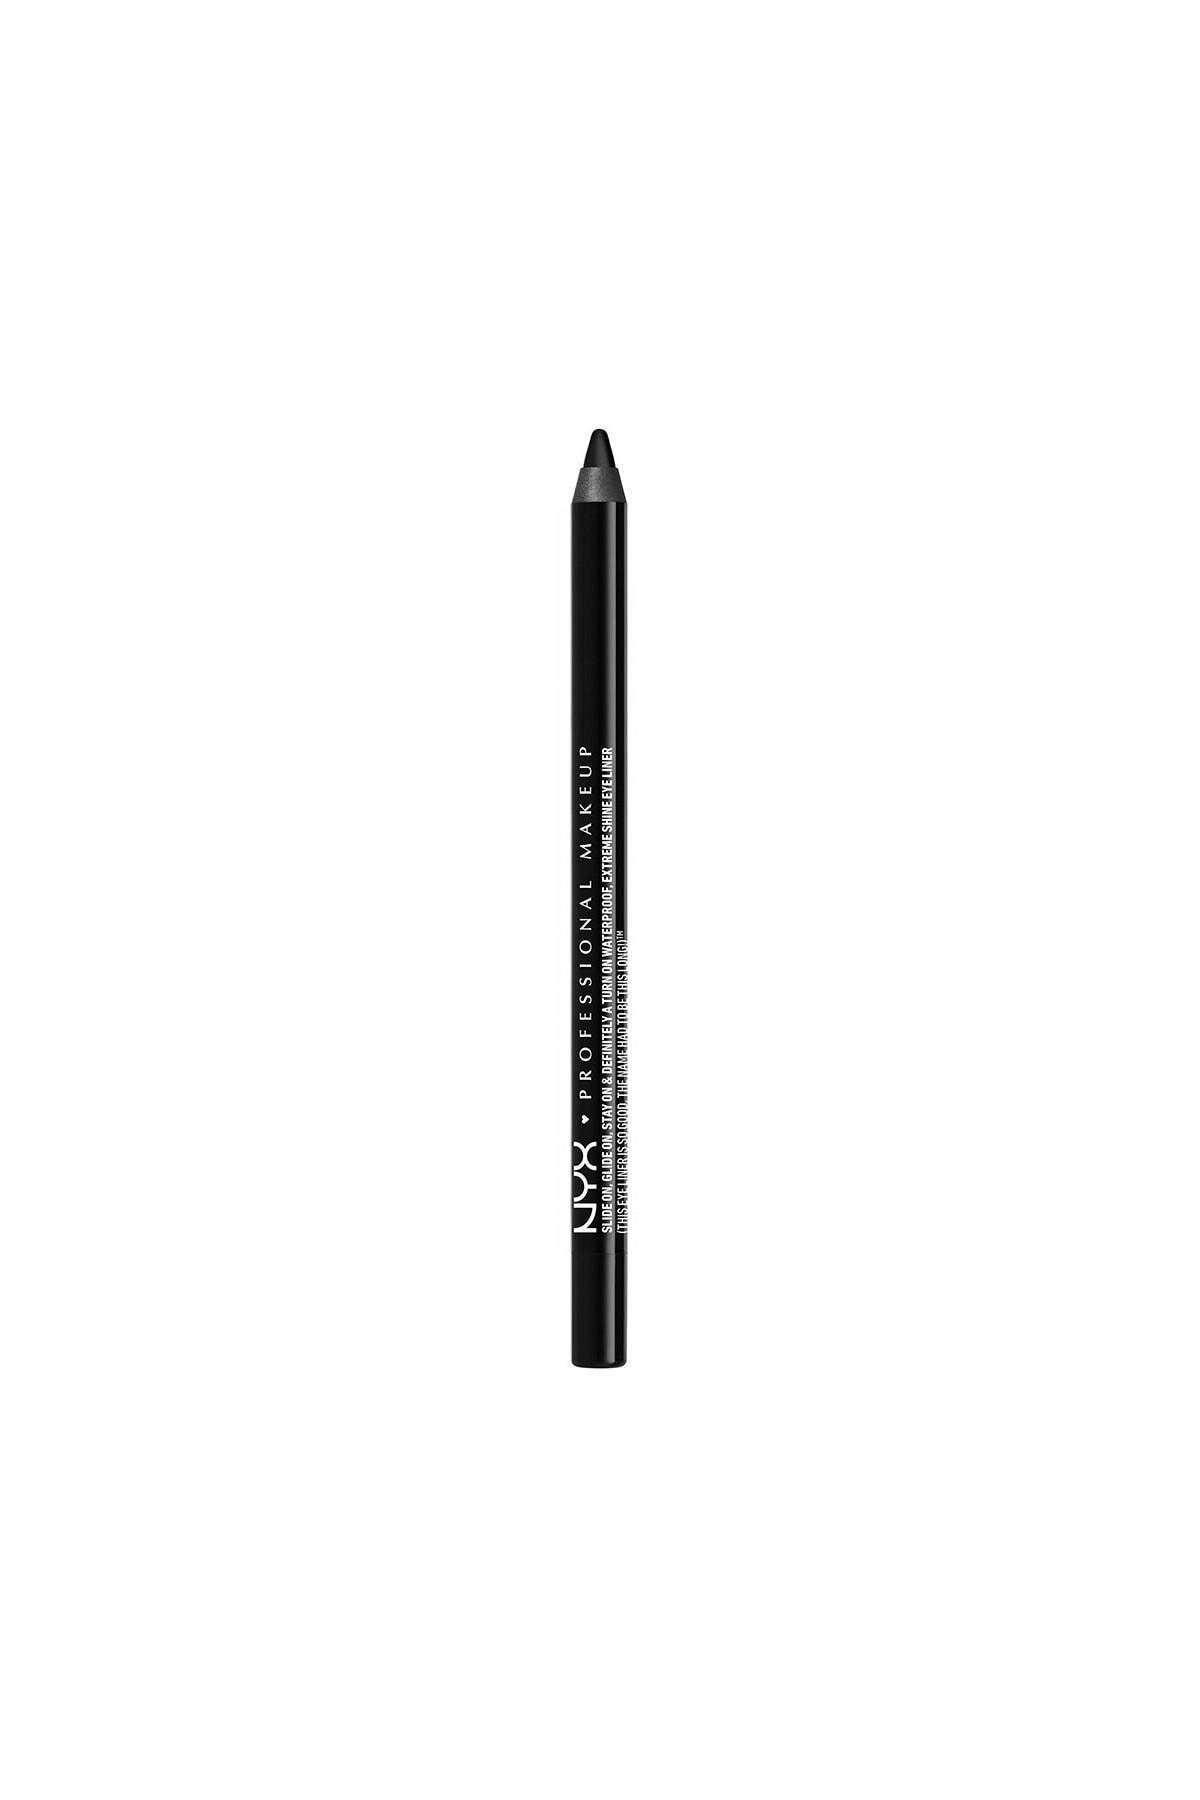 NYX Professional Makeup Siyah Göz Kalemi - Slide on Eye Pencil Jet Black 6 g 800897141226